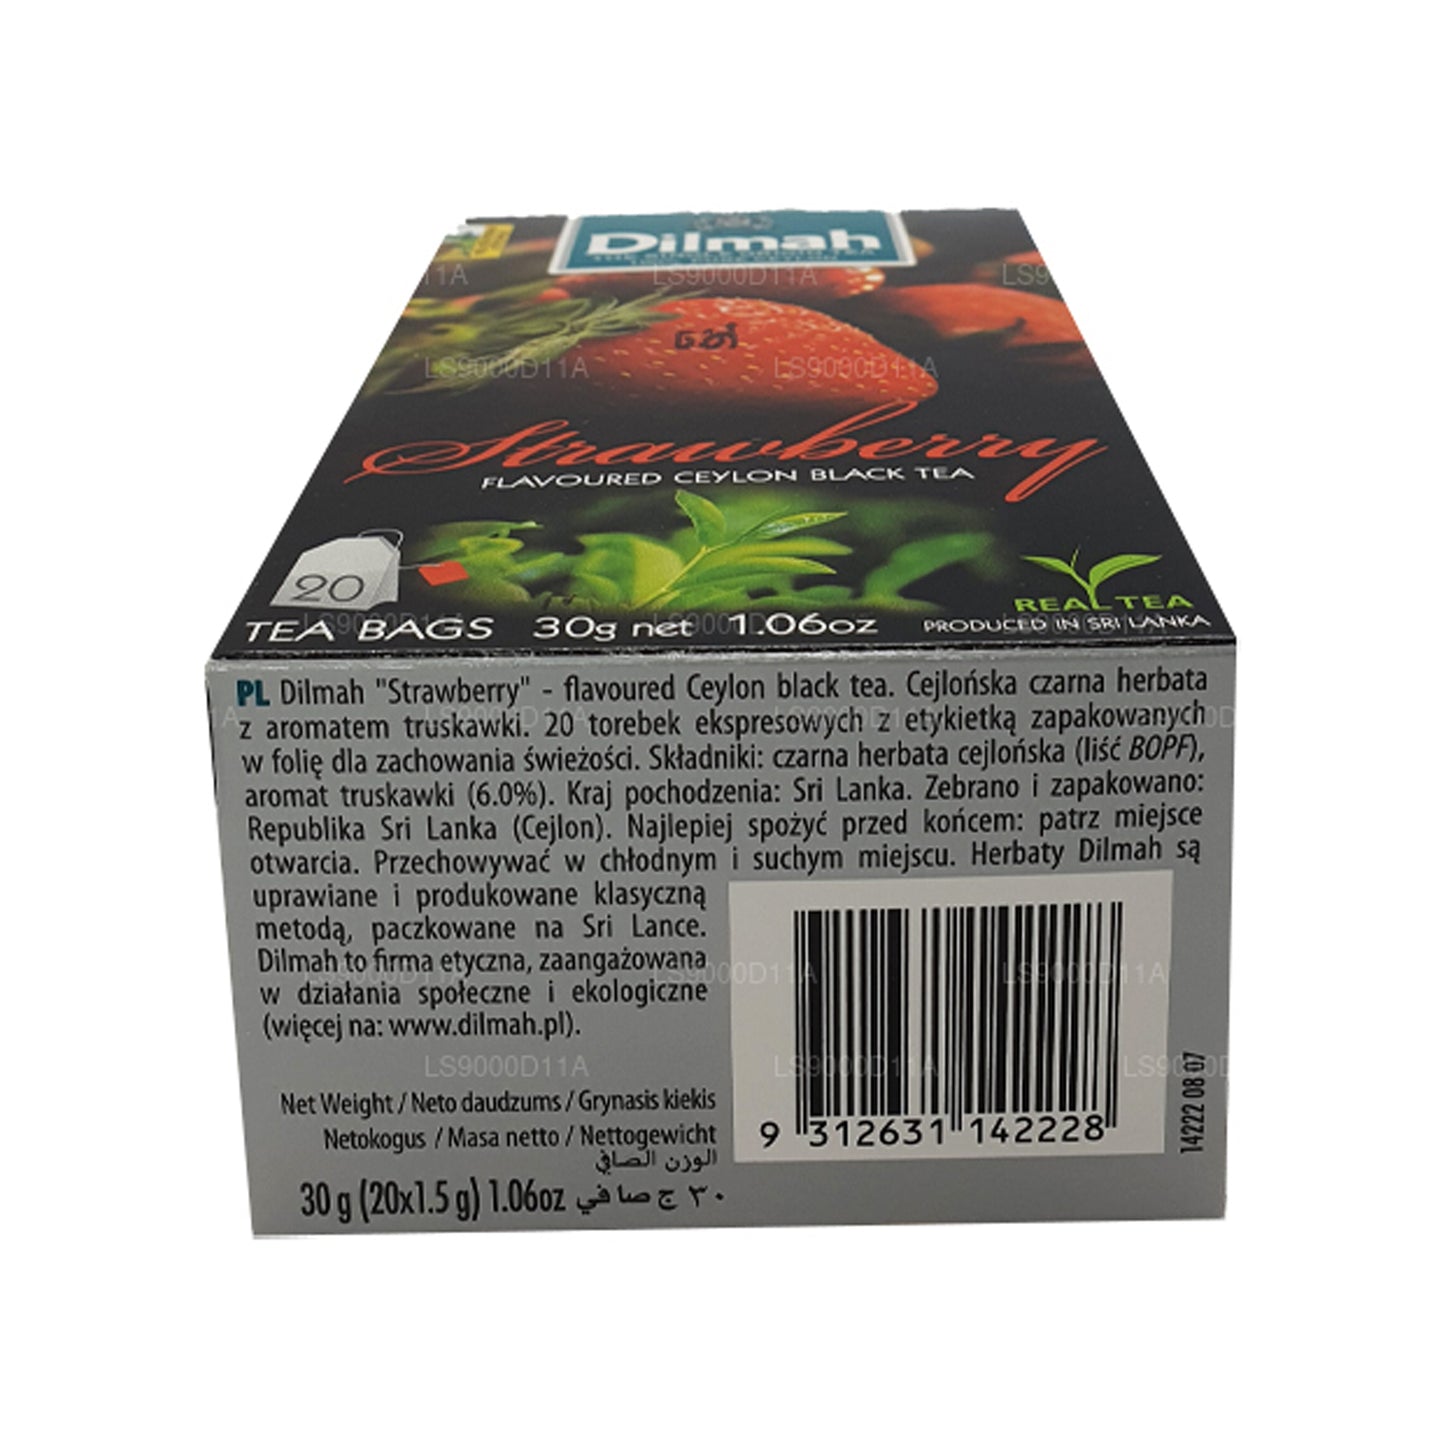 Dilmah Strawberry Flavored Ceylon Black Tea (30g) 20 Tea Bags